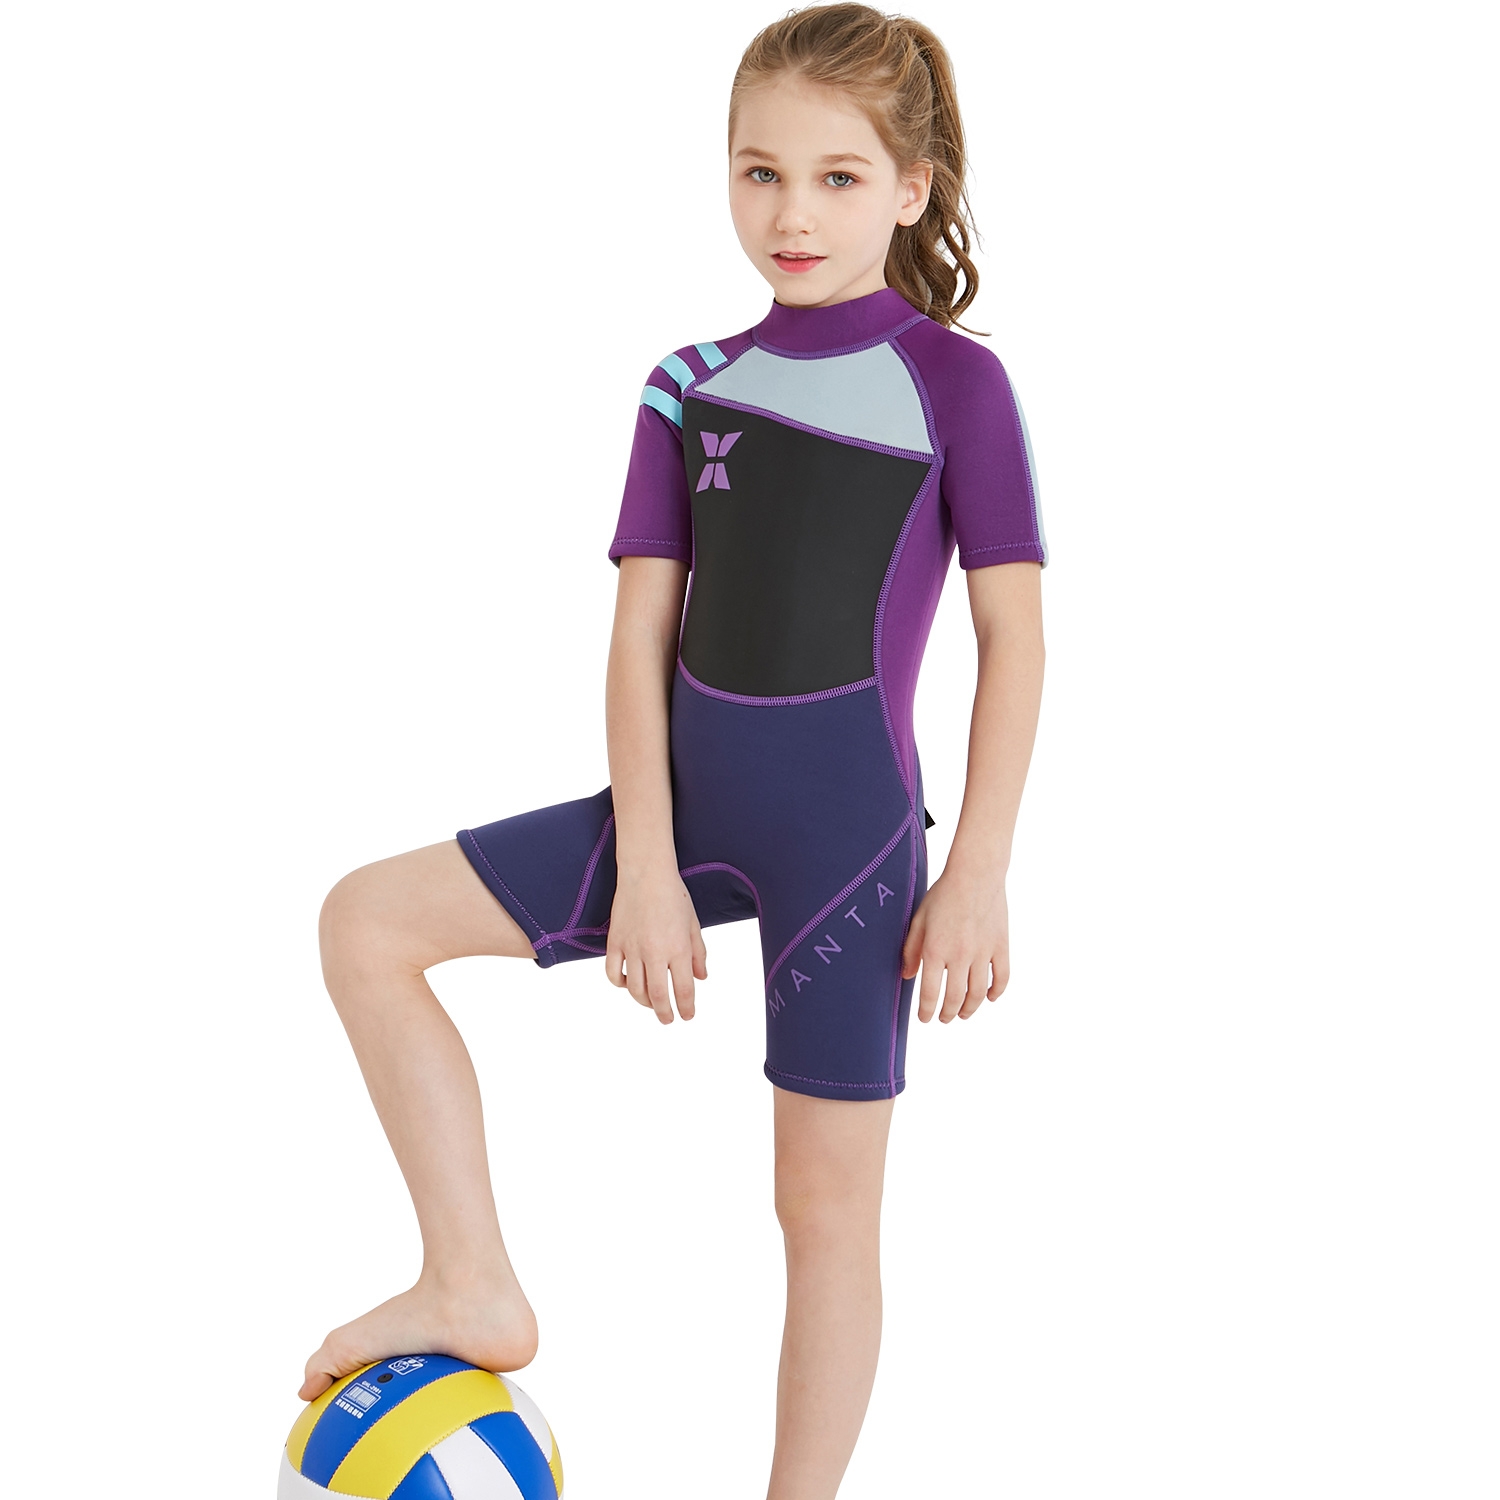 2018 fashion short sleeve boy girl children swimwear wetsuit sailing suit